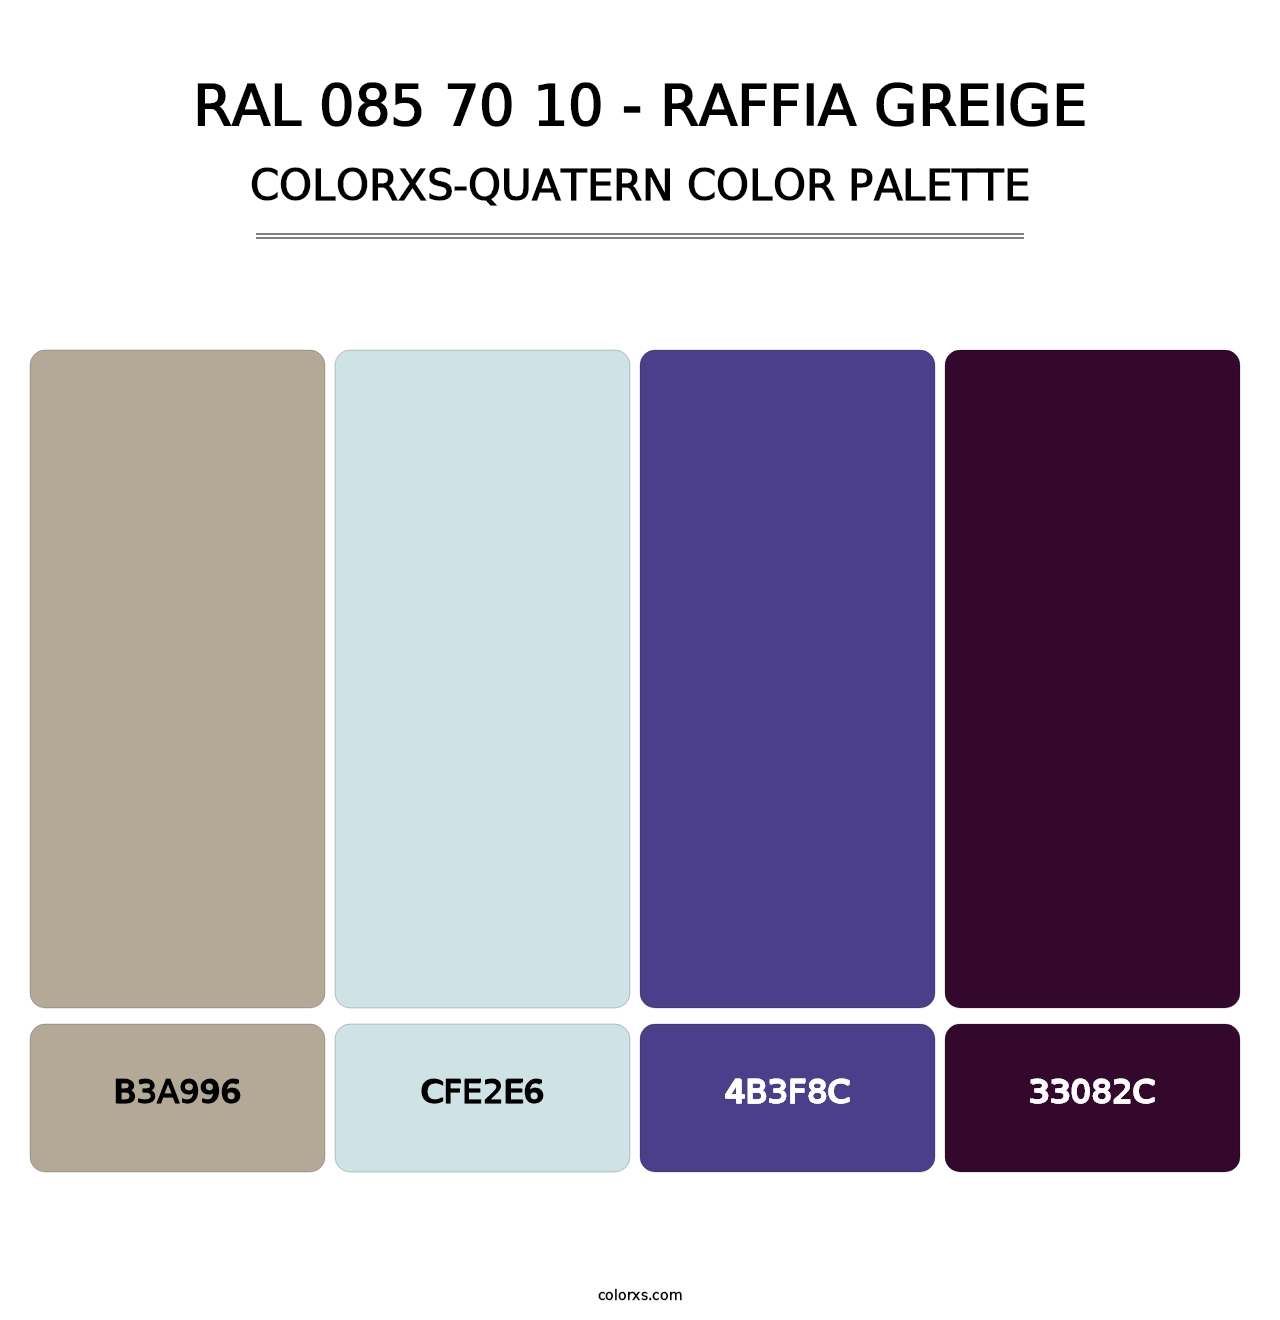 RAL 085 70 10 - Raffia Greige - Colorxs Quatern Palette